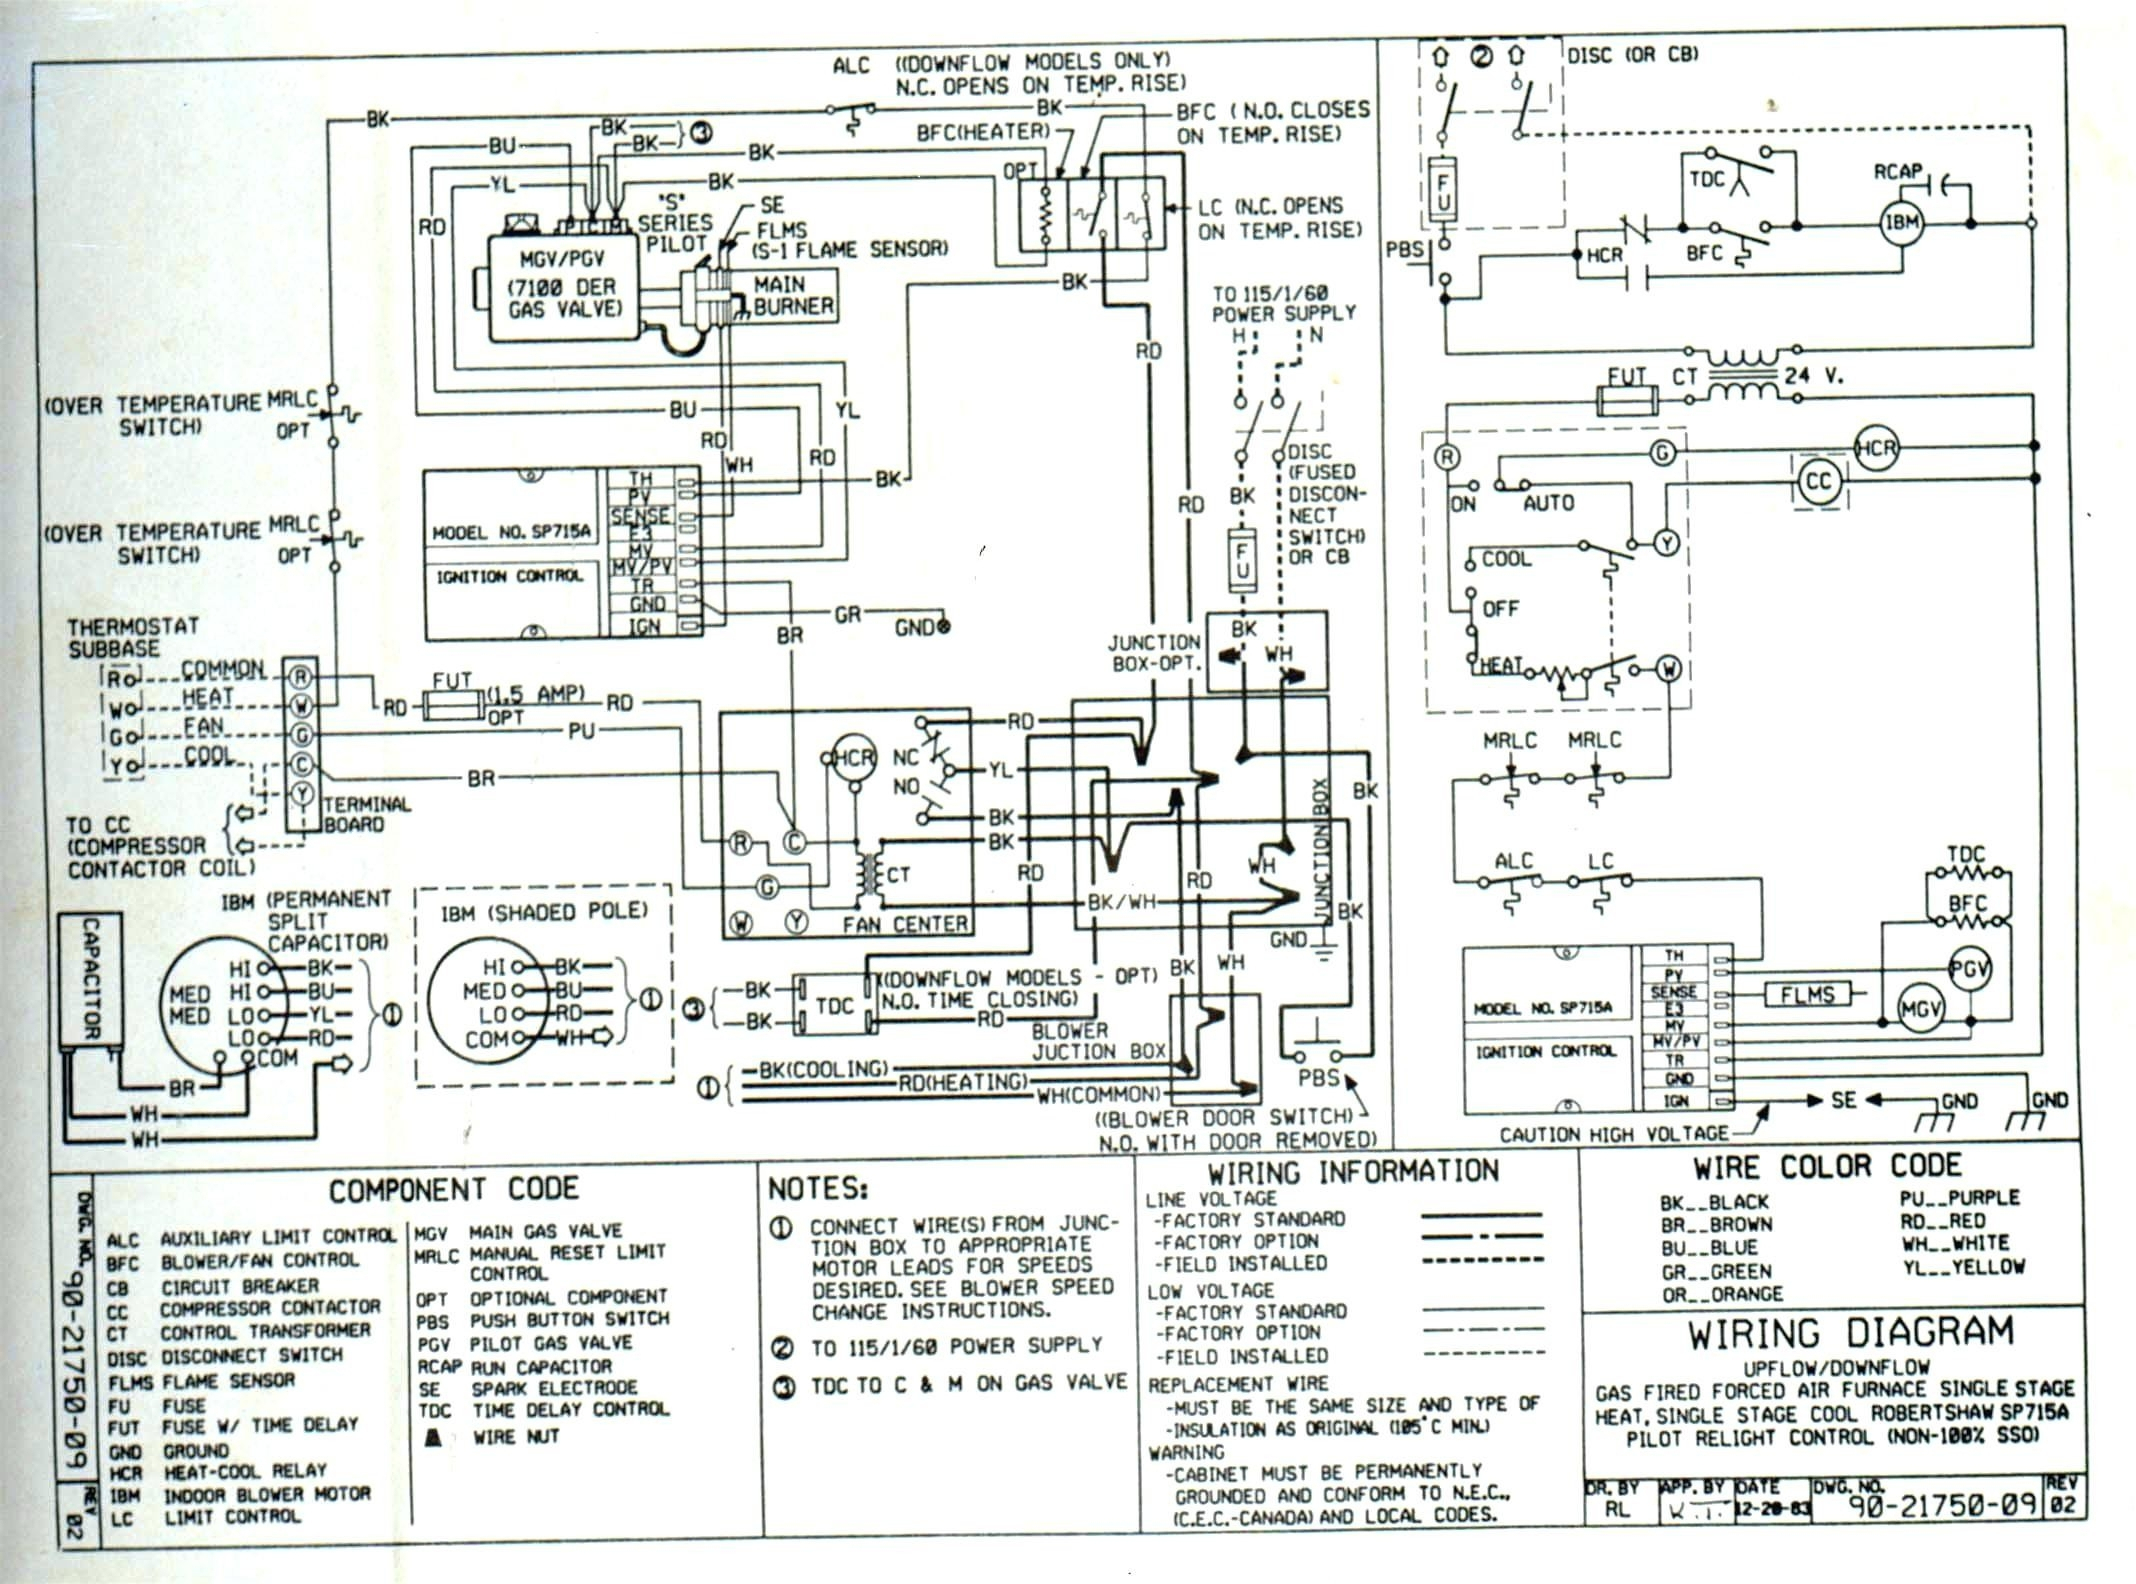 Trane Voyager Wiring Diagram | Best Wiring Library - Trane Thermostat Wiring Diagram